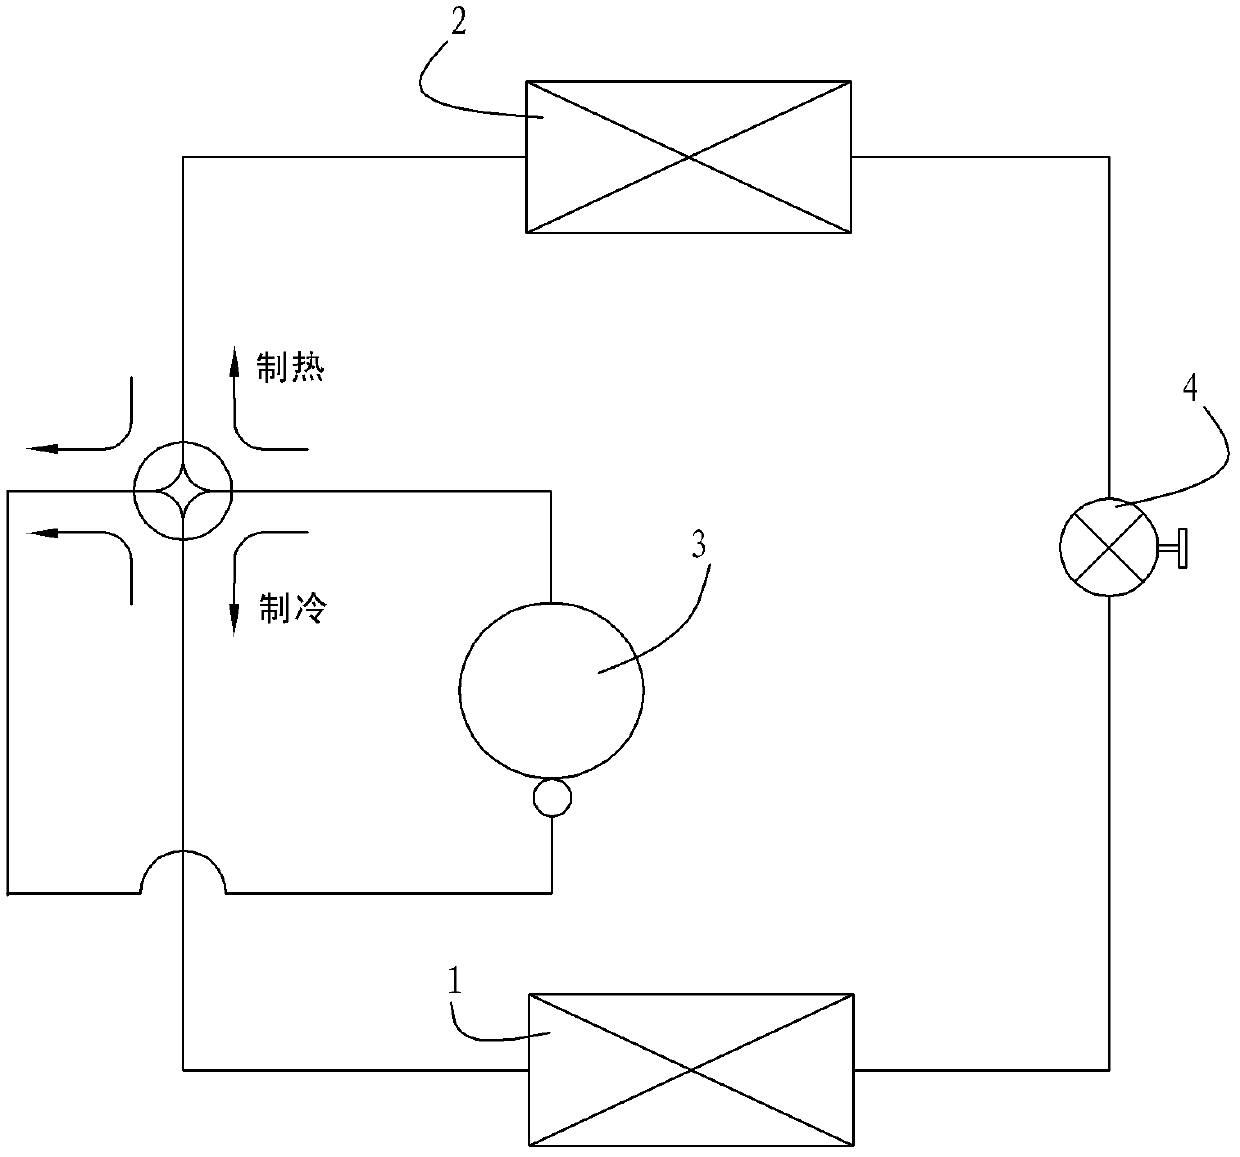 Control method for calculating exhaust temperature of compressor of air conditioner